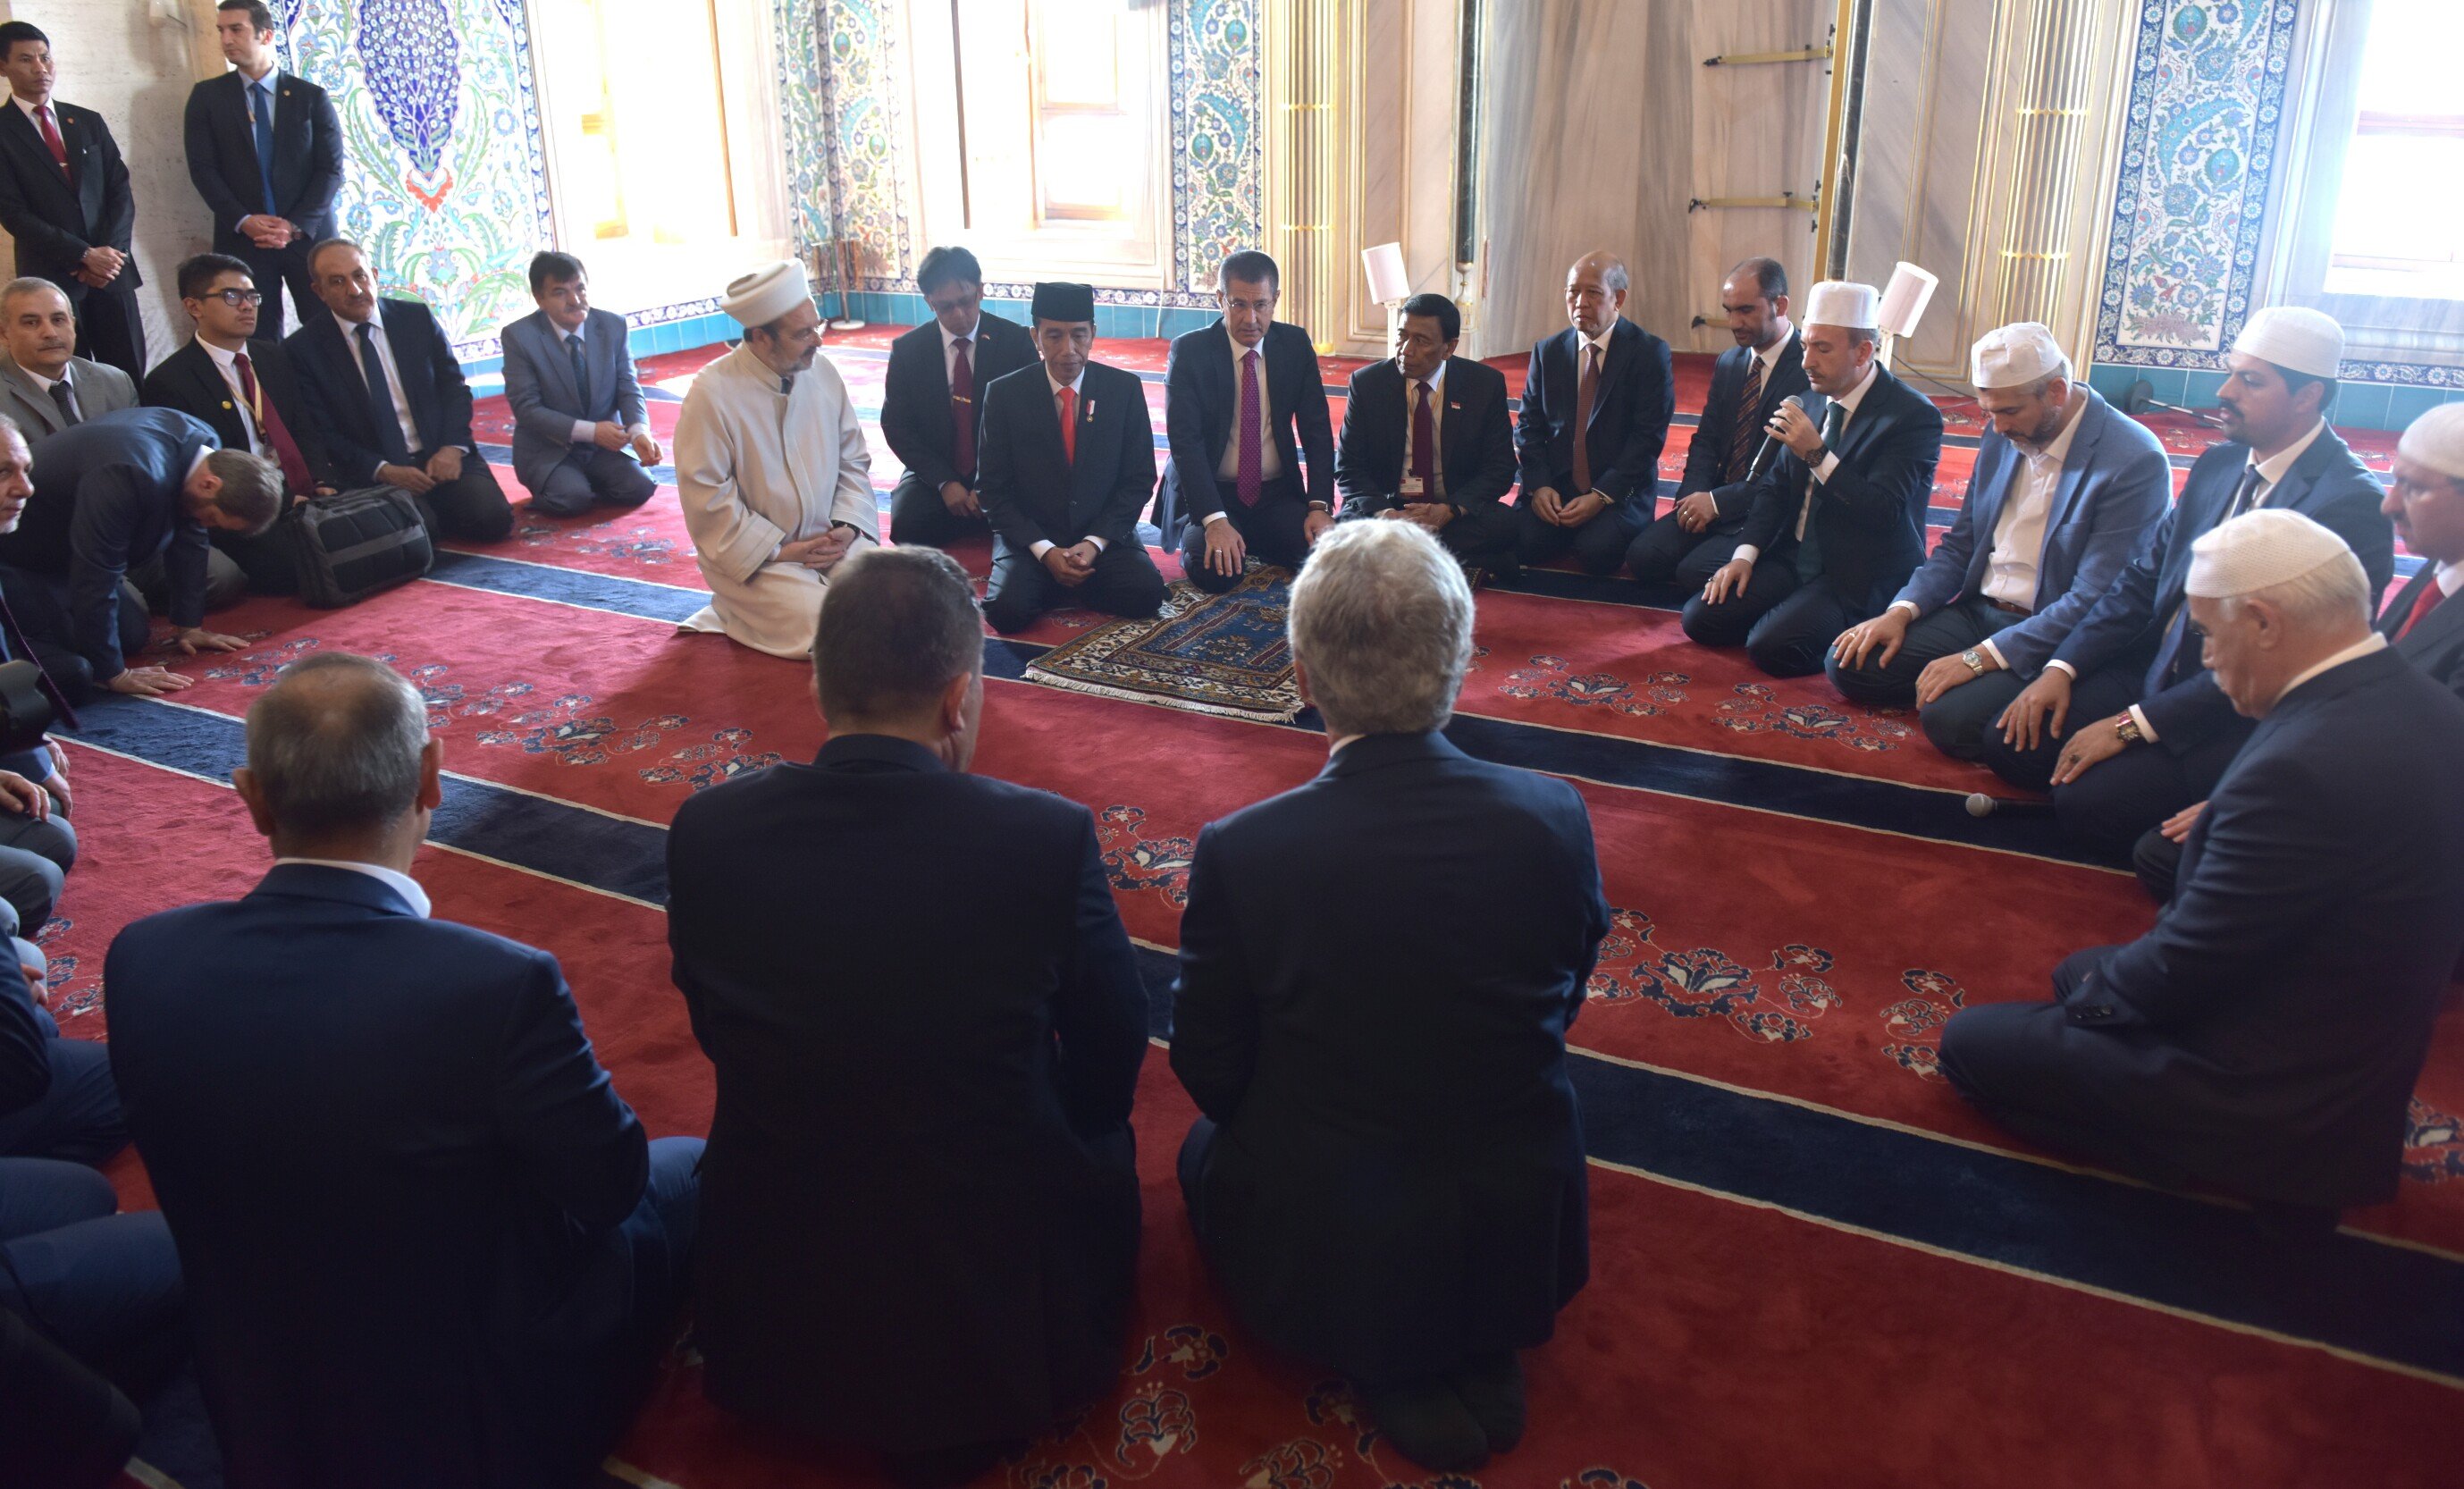 Presiden Jokowi berdialog dengan para ulama saat berkunjung ke Masjid Kocatepe Jamii, di Ankara, Turki, Kamis (6/7) pagi.